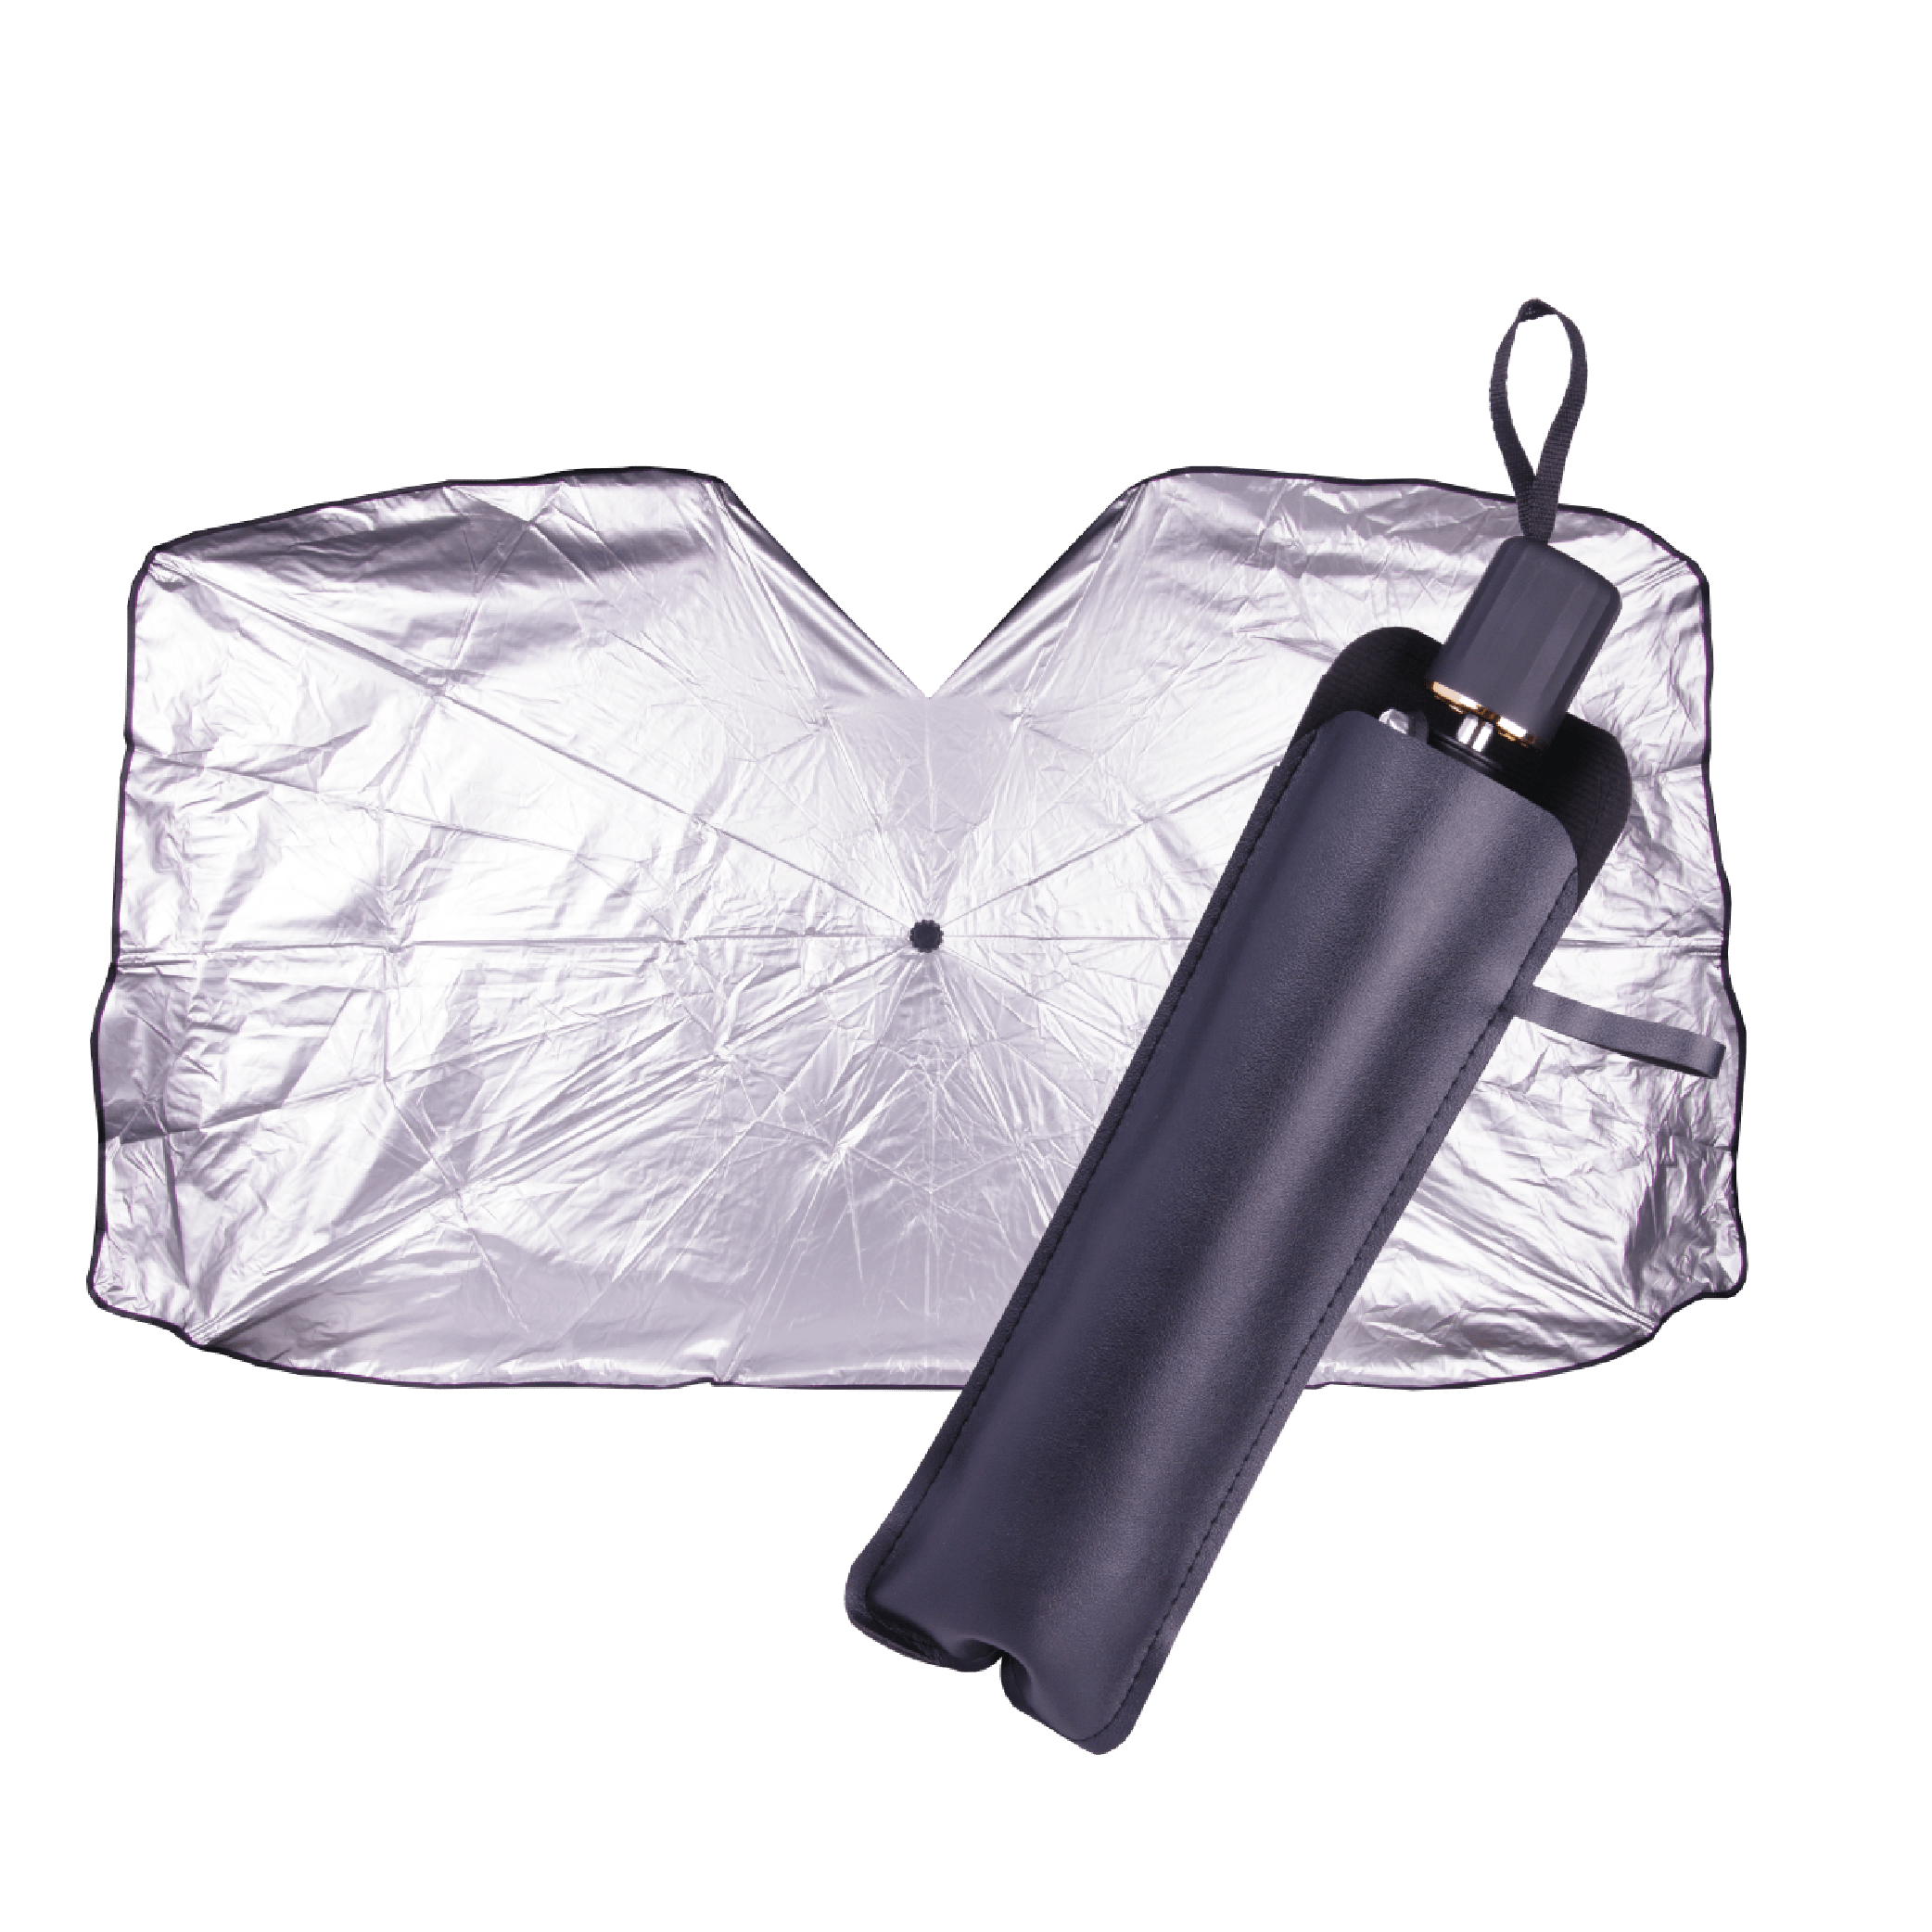 The new  generation sunshade  heat-insulating umbrella HPN905